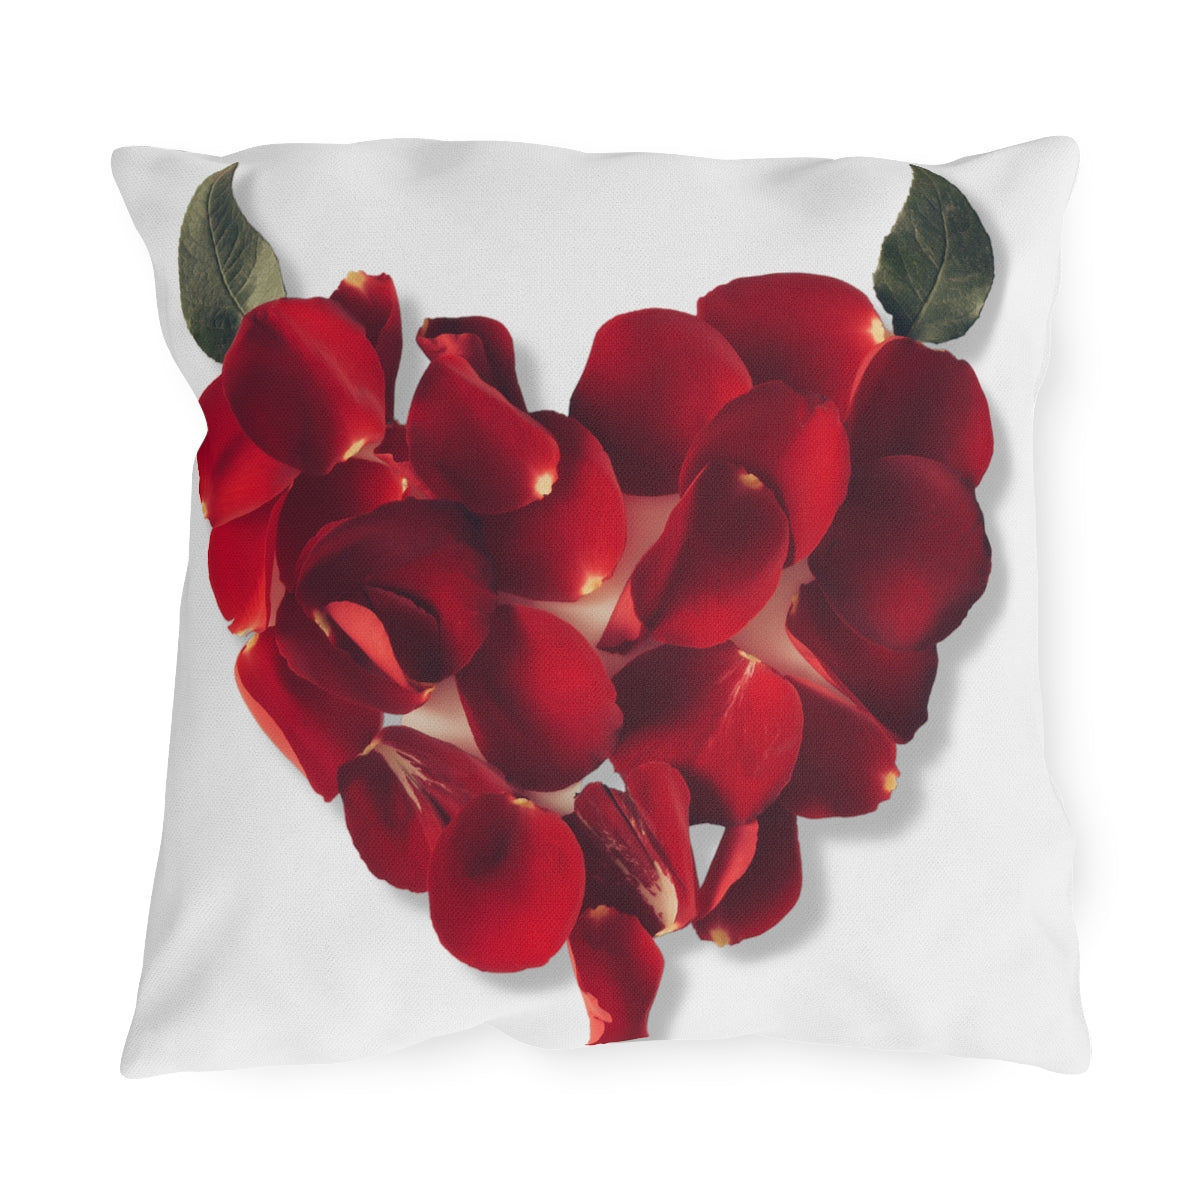 Horned Floral Heart Outdoor Pillows